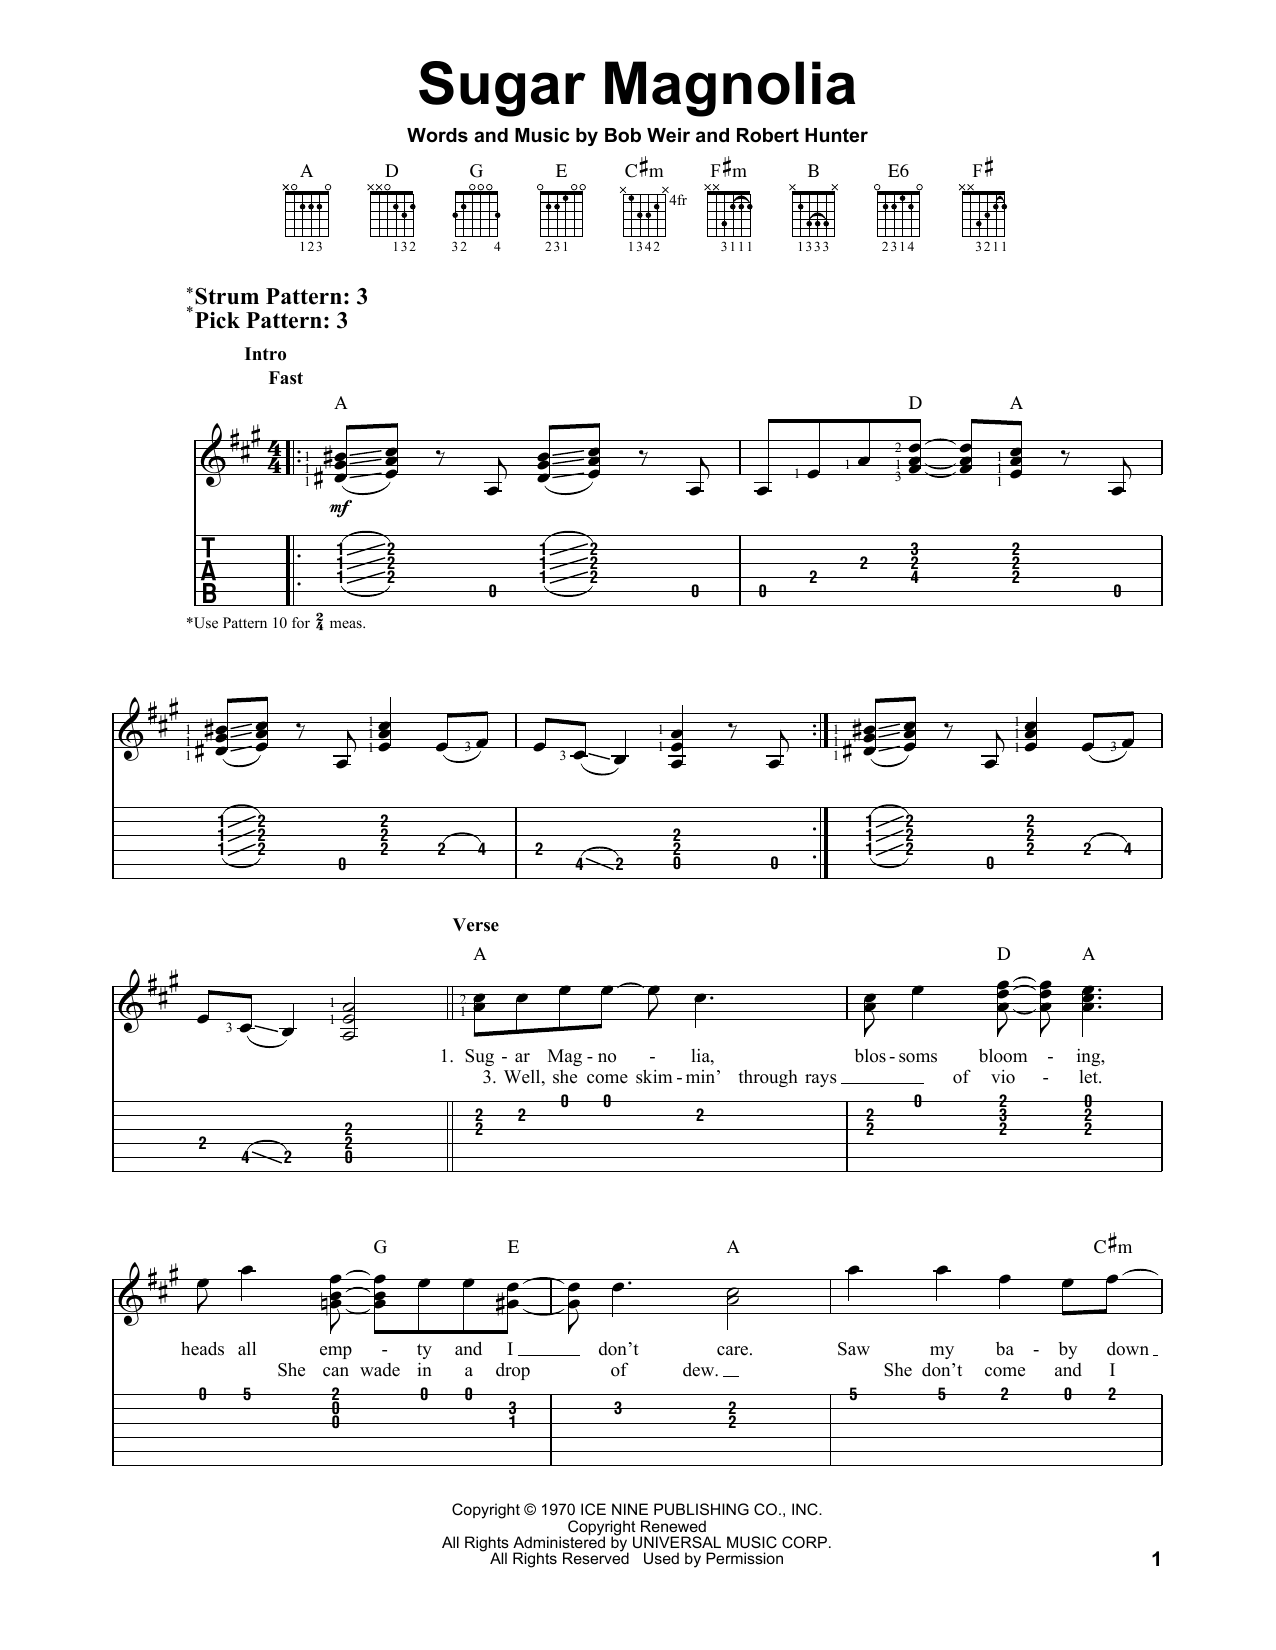 Grateful Dead Sugar Magnolia Sheet Music Notes & Chords for Guitar Tab Play-Along - Download or Print PDF